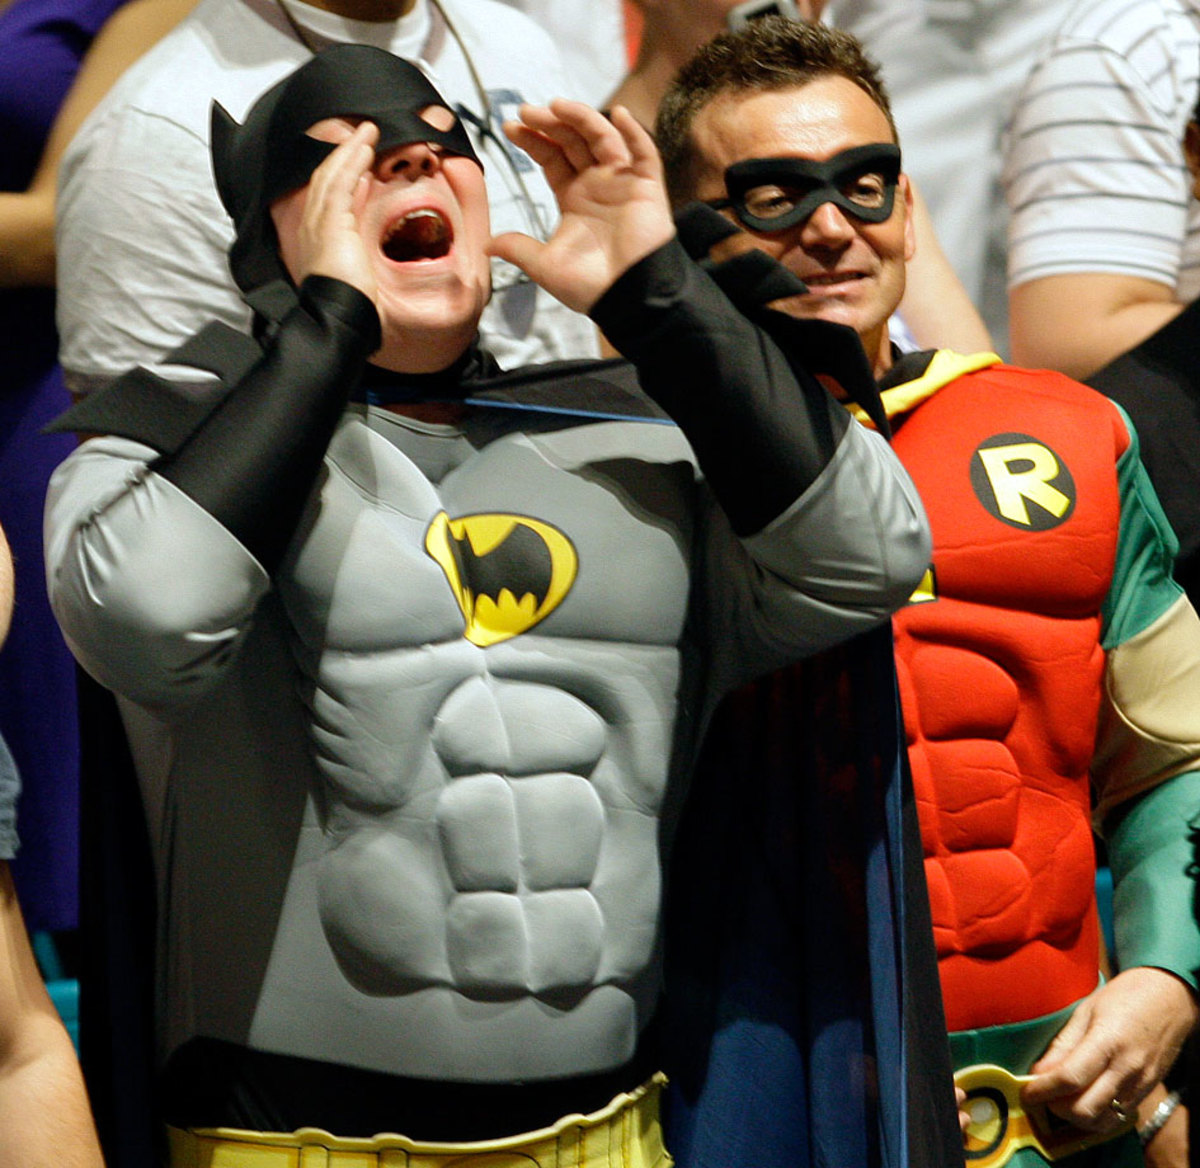 2009-Batman-Robin-fans-Pacquiao-Hatton-weigh-in.jpg